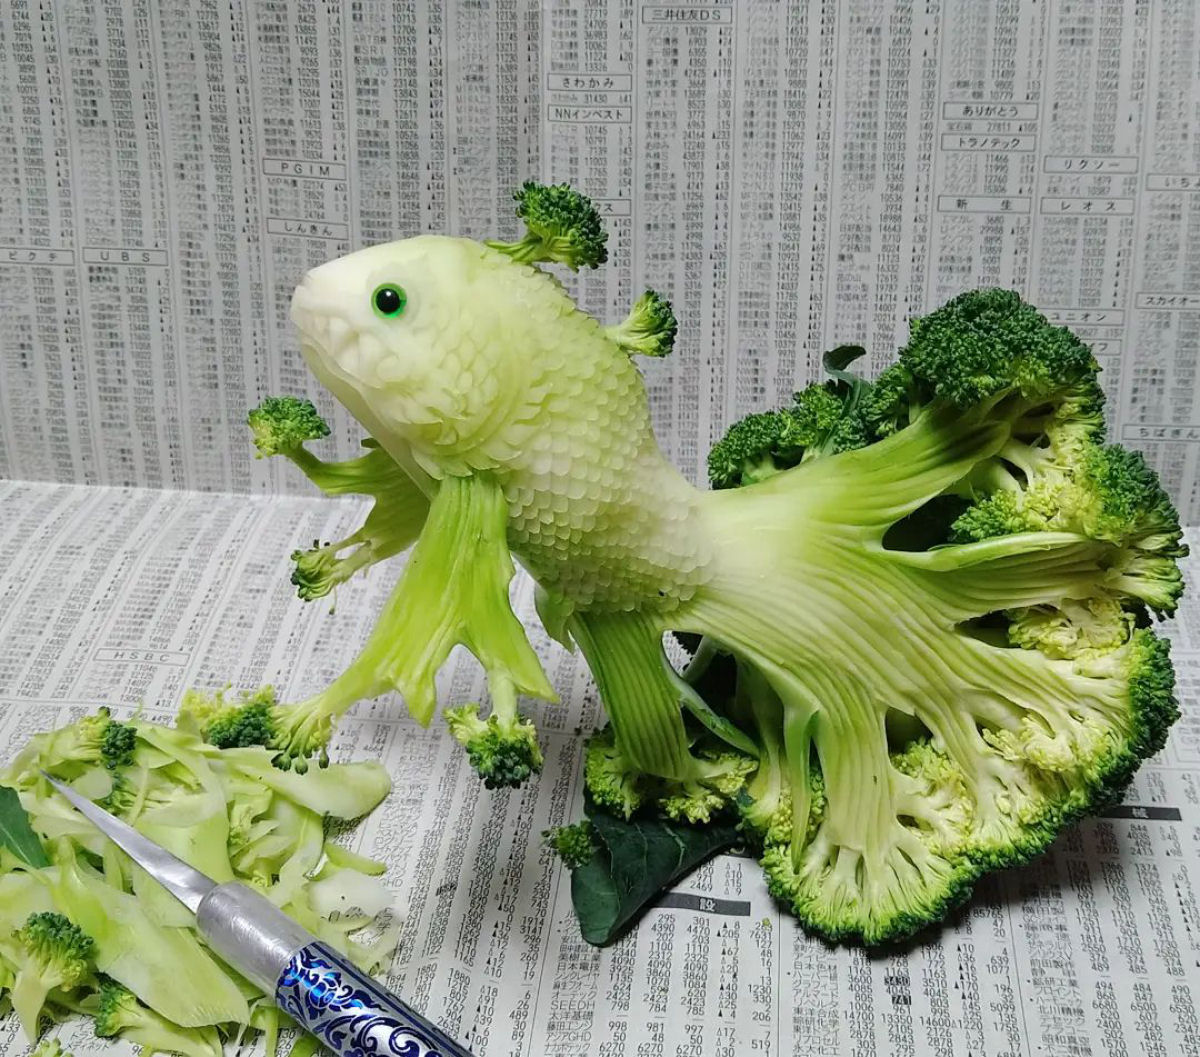 Escultor japons transforma frutas e legumes  em esculturas comestveis brilhantes 12